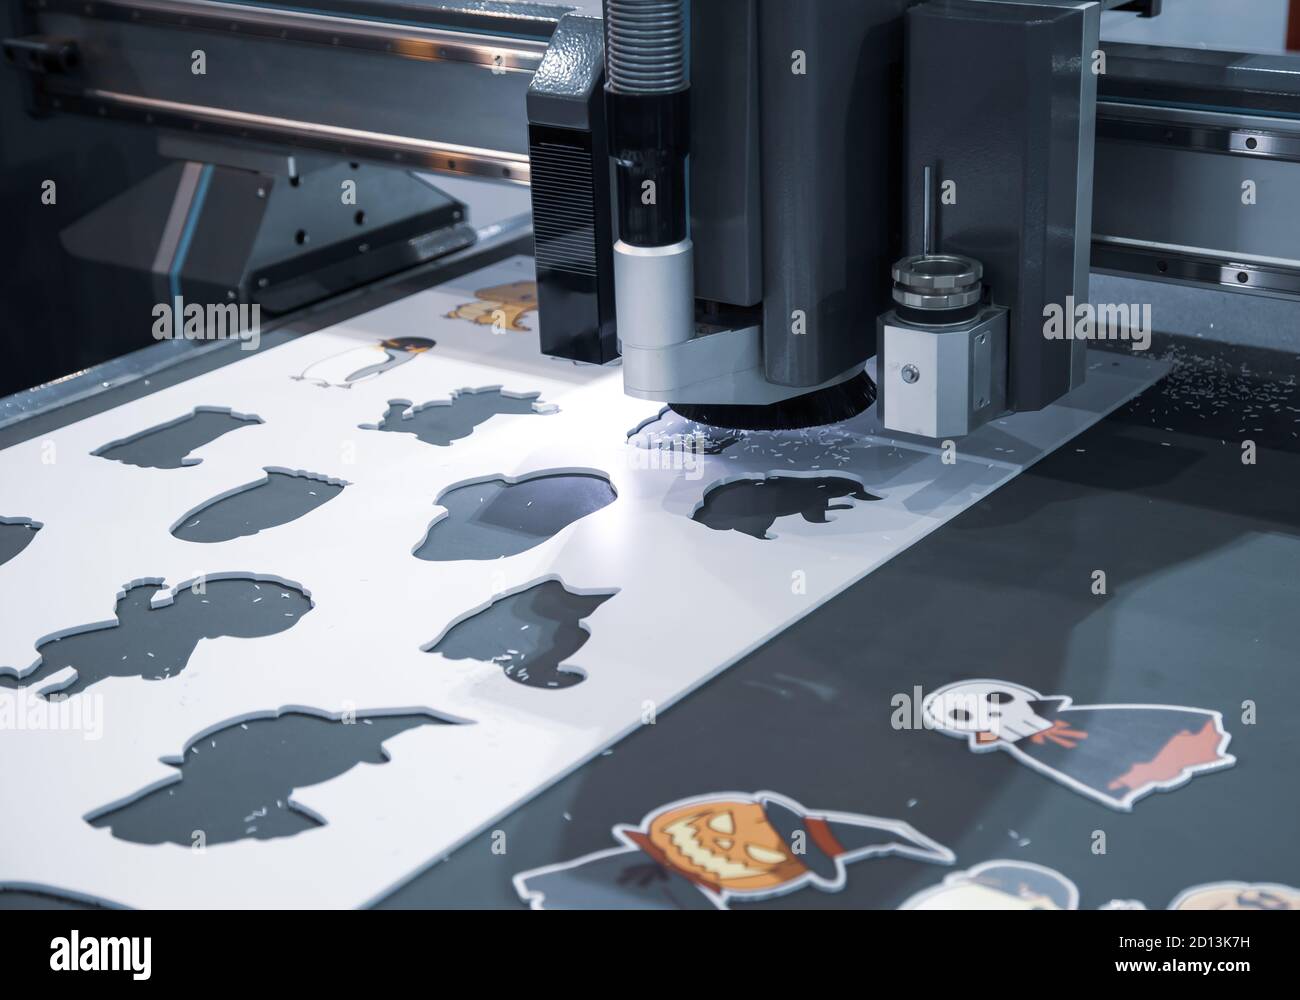 Digital cutting machine cutting cartoon graphic design on ABS plastic sheet  Stock Photo - Alamy